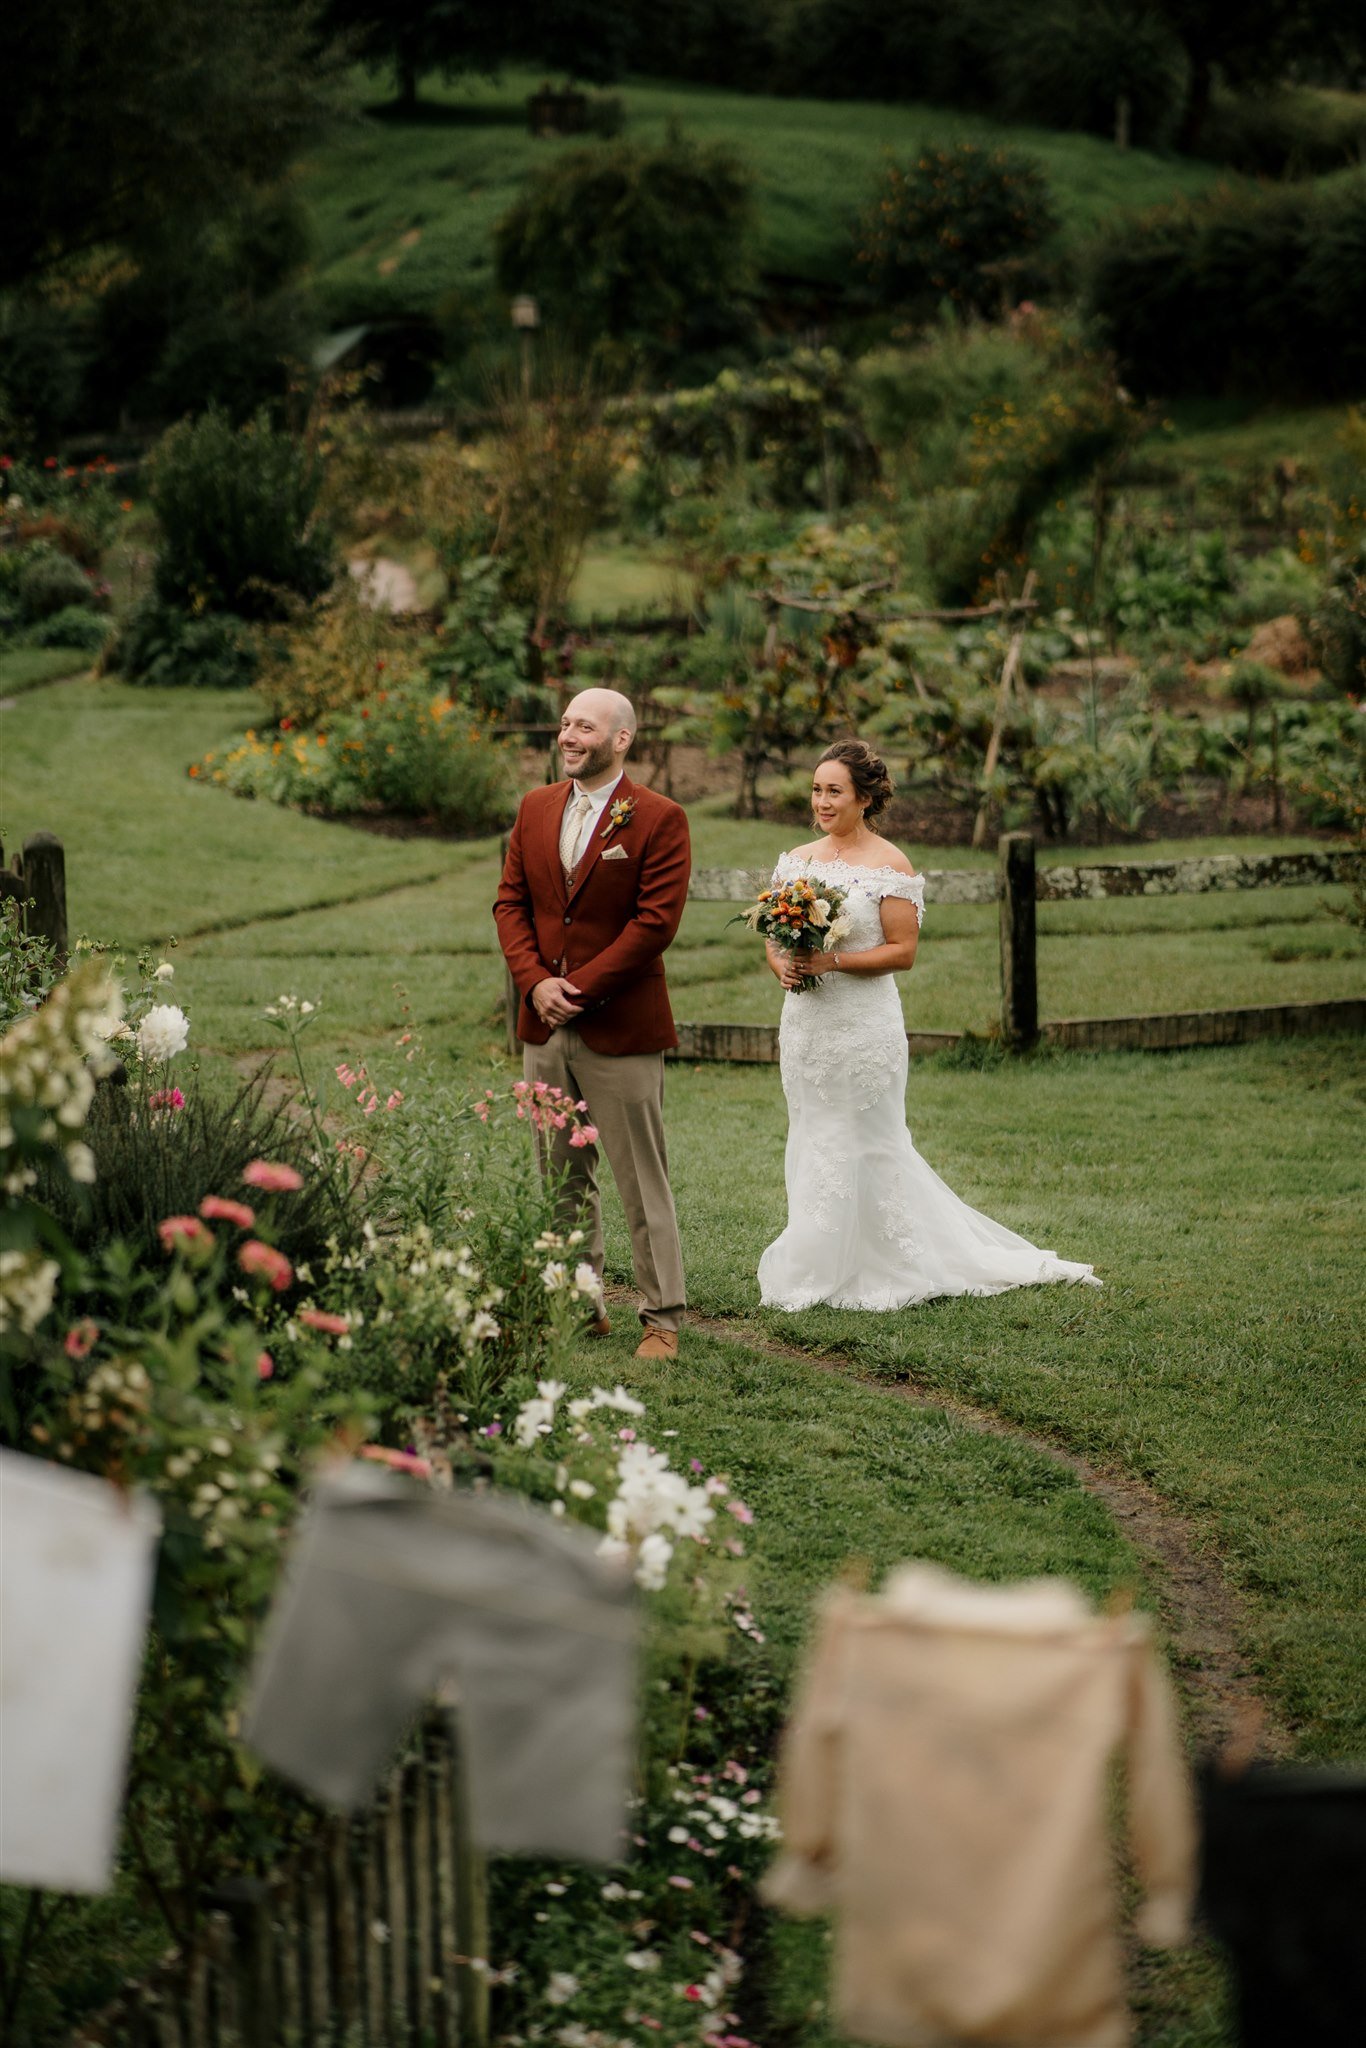 Matamata wedding venue | Hobbiton Tour | Auckland Wedding Photographer | Best Videographer | Top Videography | First Look Photos | The Green Dragon Inn | Dear White Productions